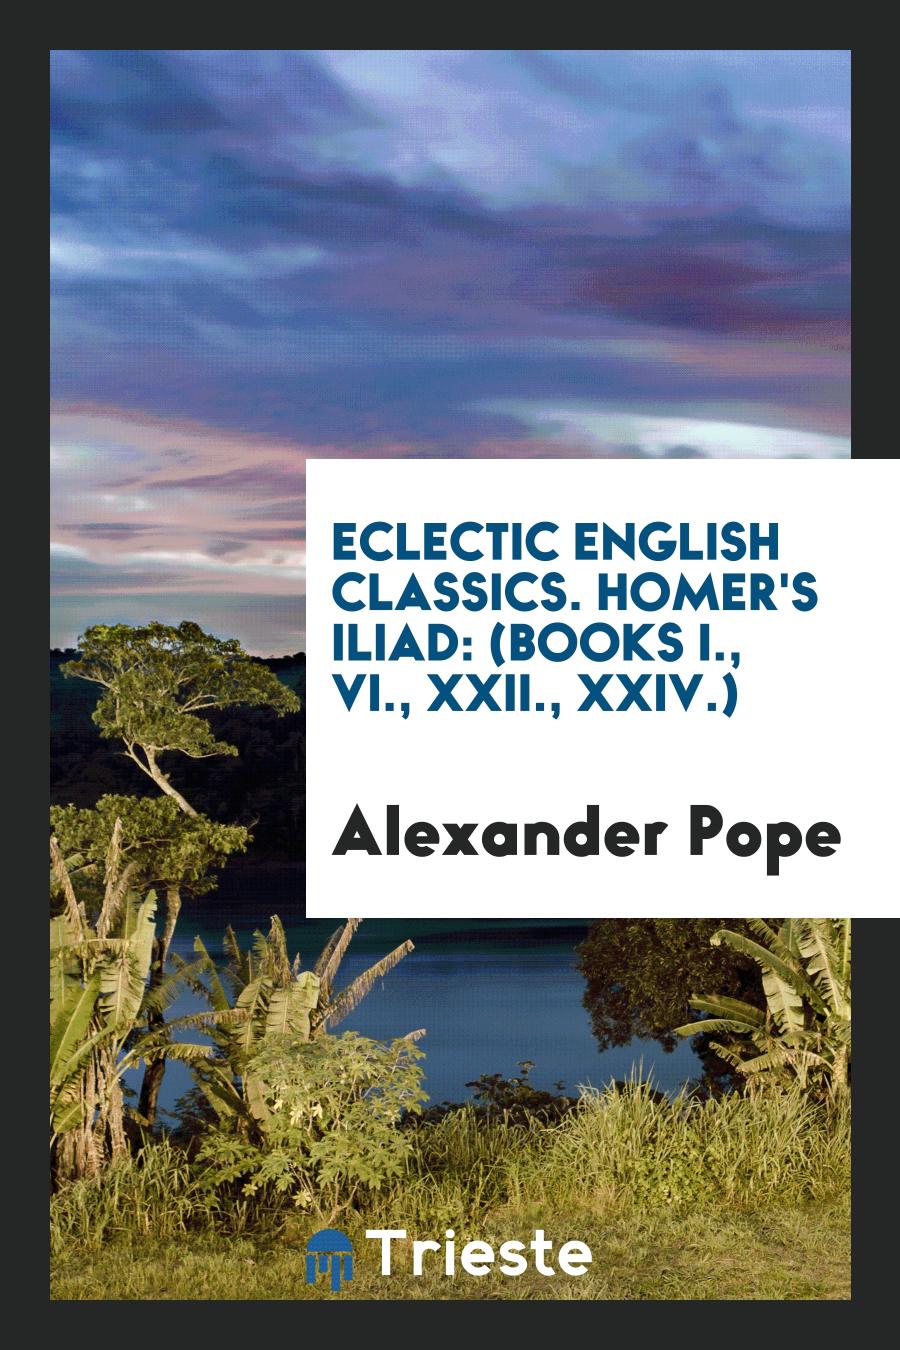 Eclectic English Classics. Homer's Iliad: (Books I., VI., XXII., XXIV.)